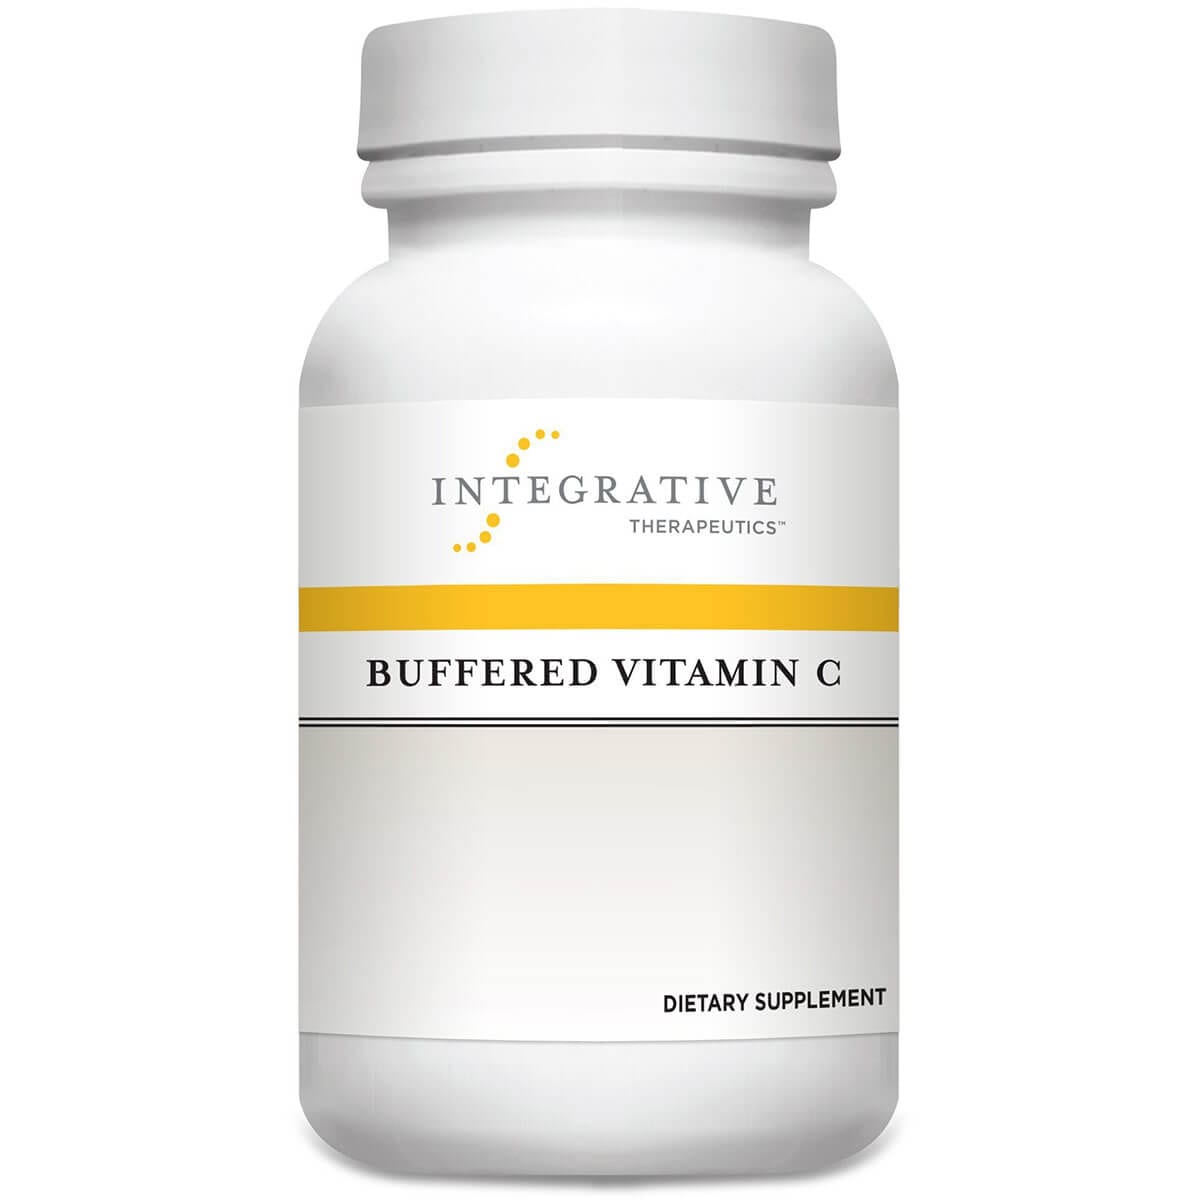 Buffered Vitamin C – Antioxidant Support